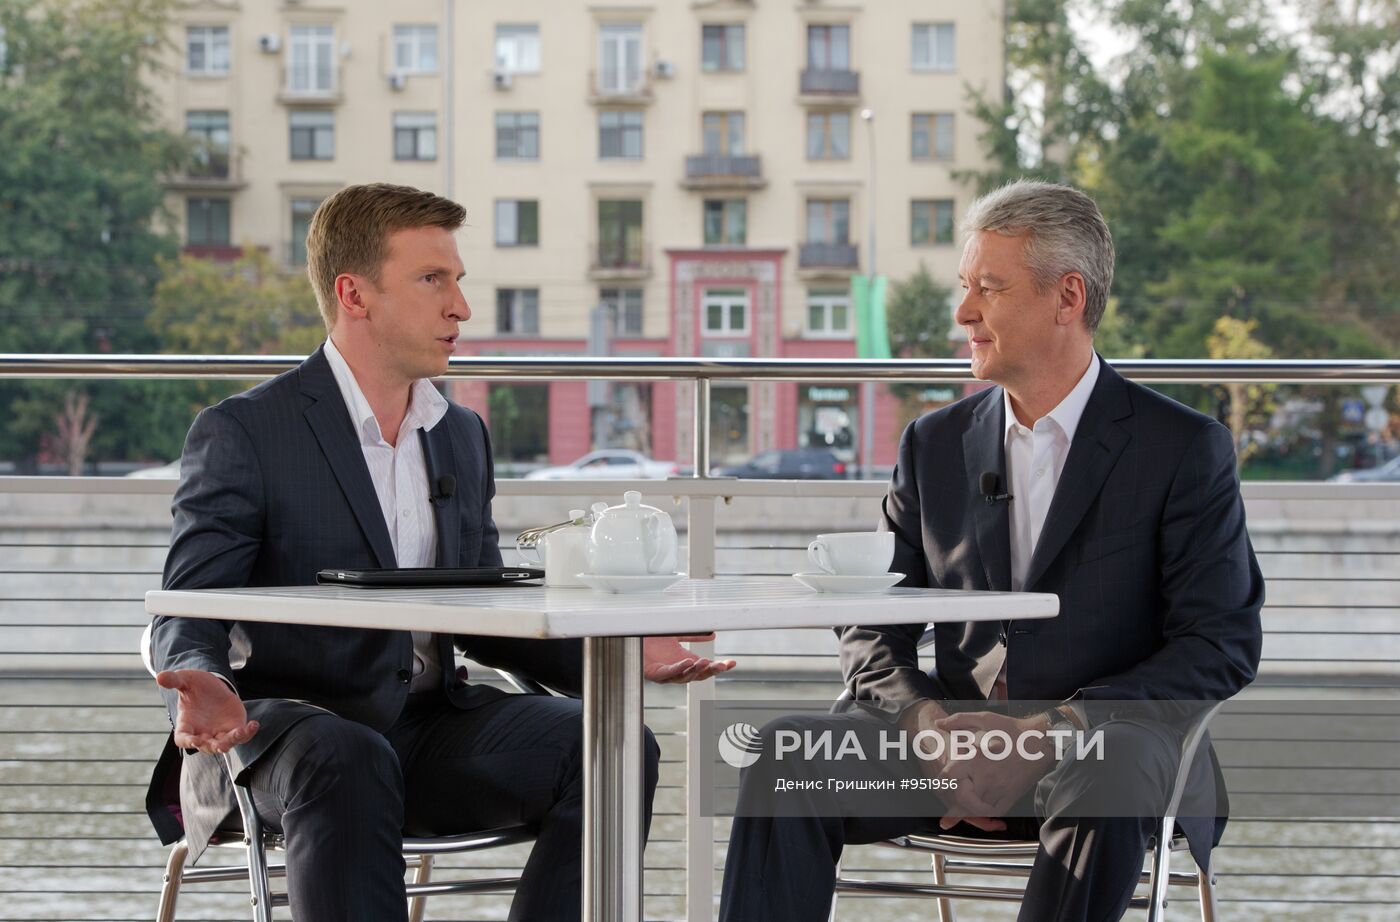 Мэр Москвы дал интервью телеканалу "Россия-24"